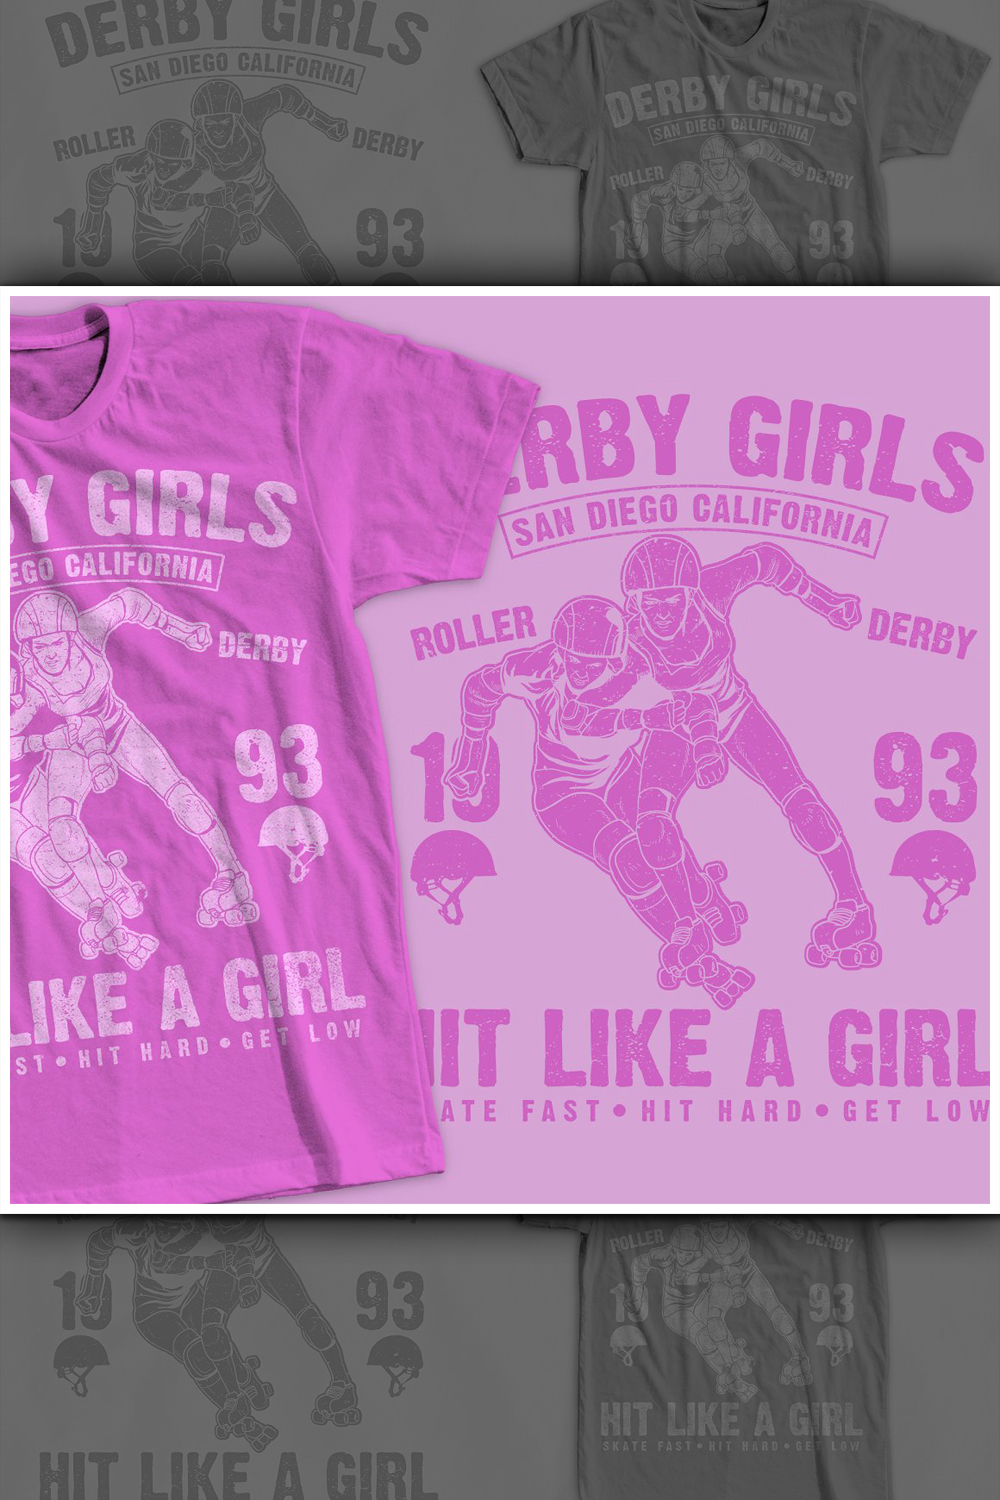 Roller derby girls t shirt design of pinterest.